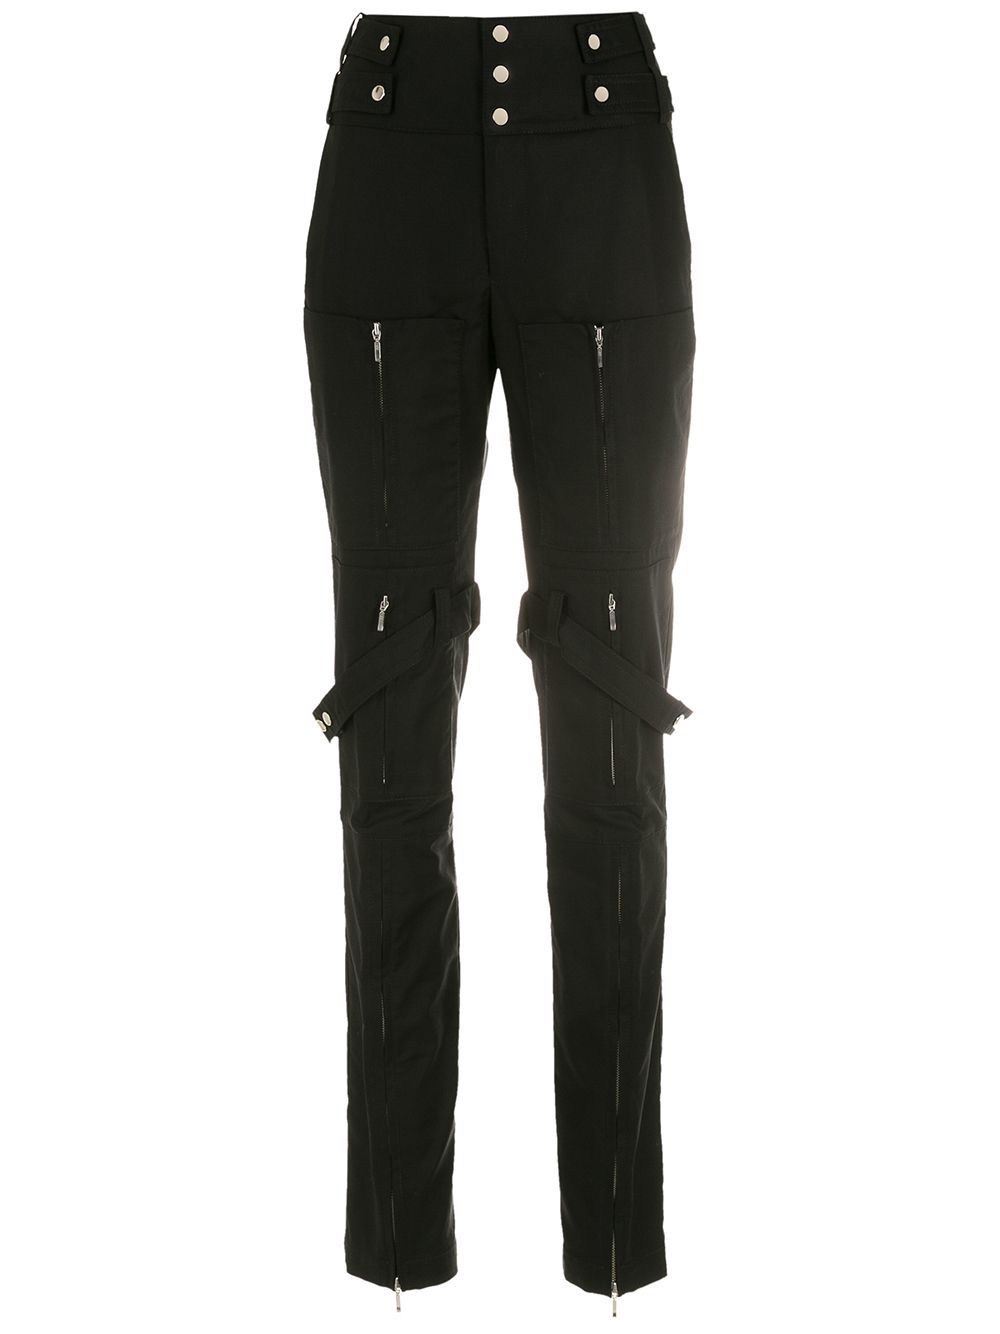 Reinaldo Lourenço Panelled Tailored Trousers - Farfetch